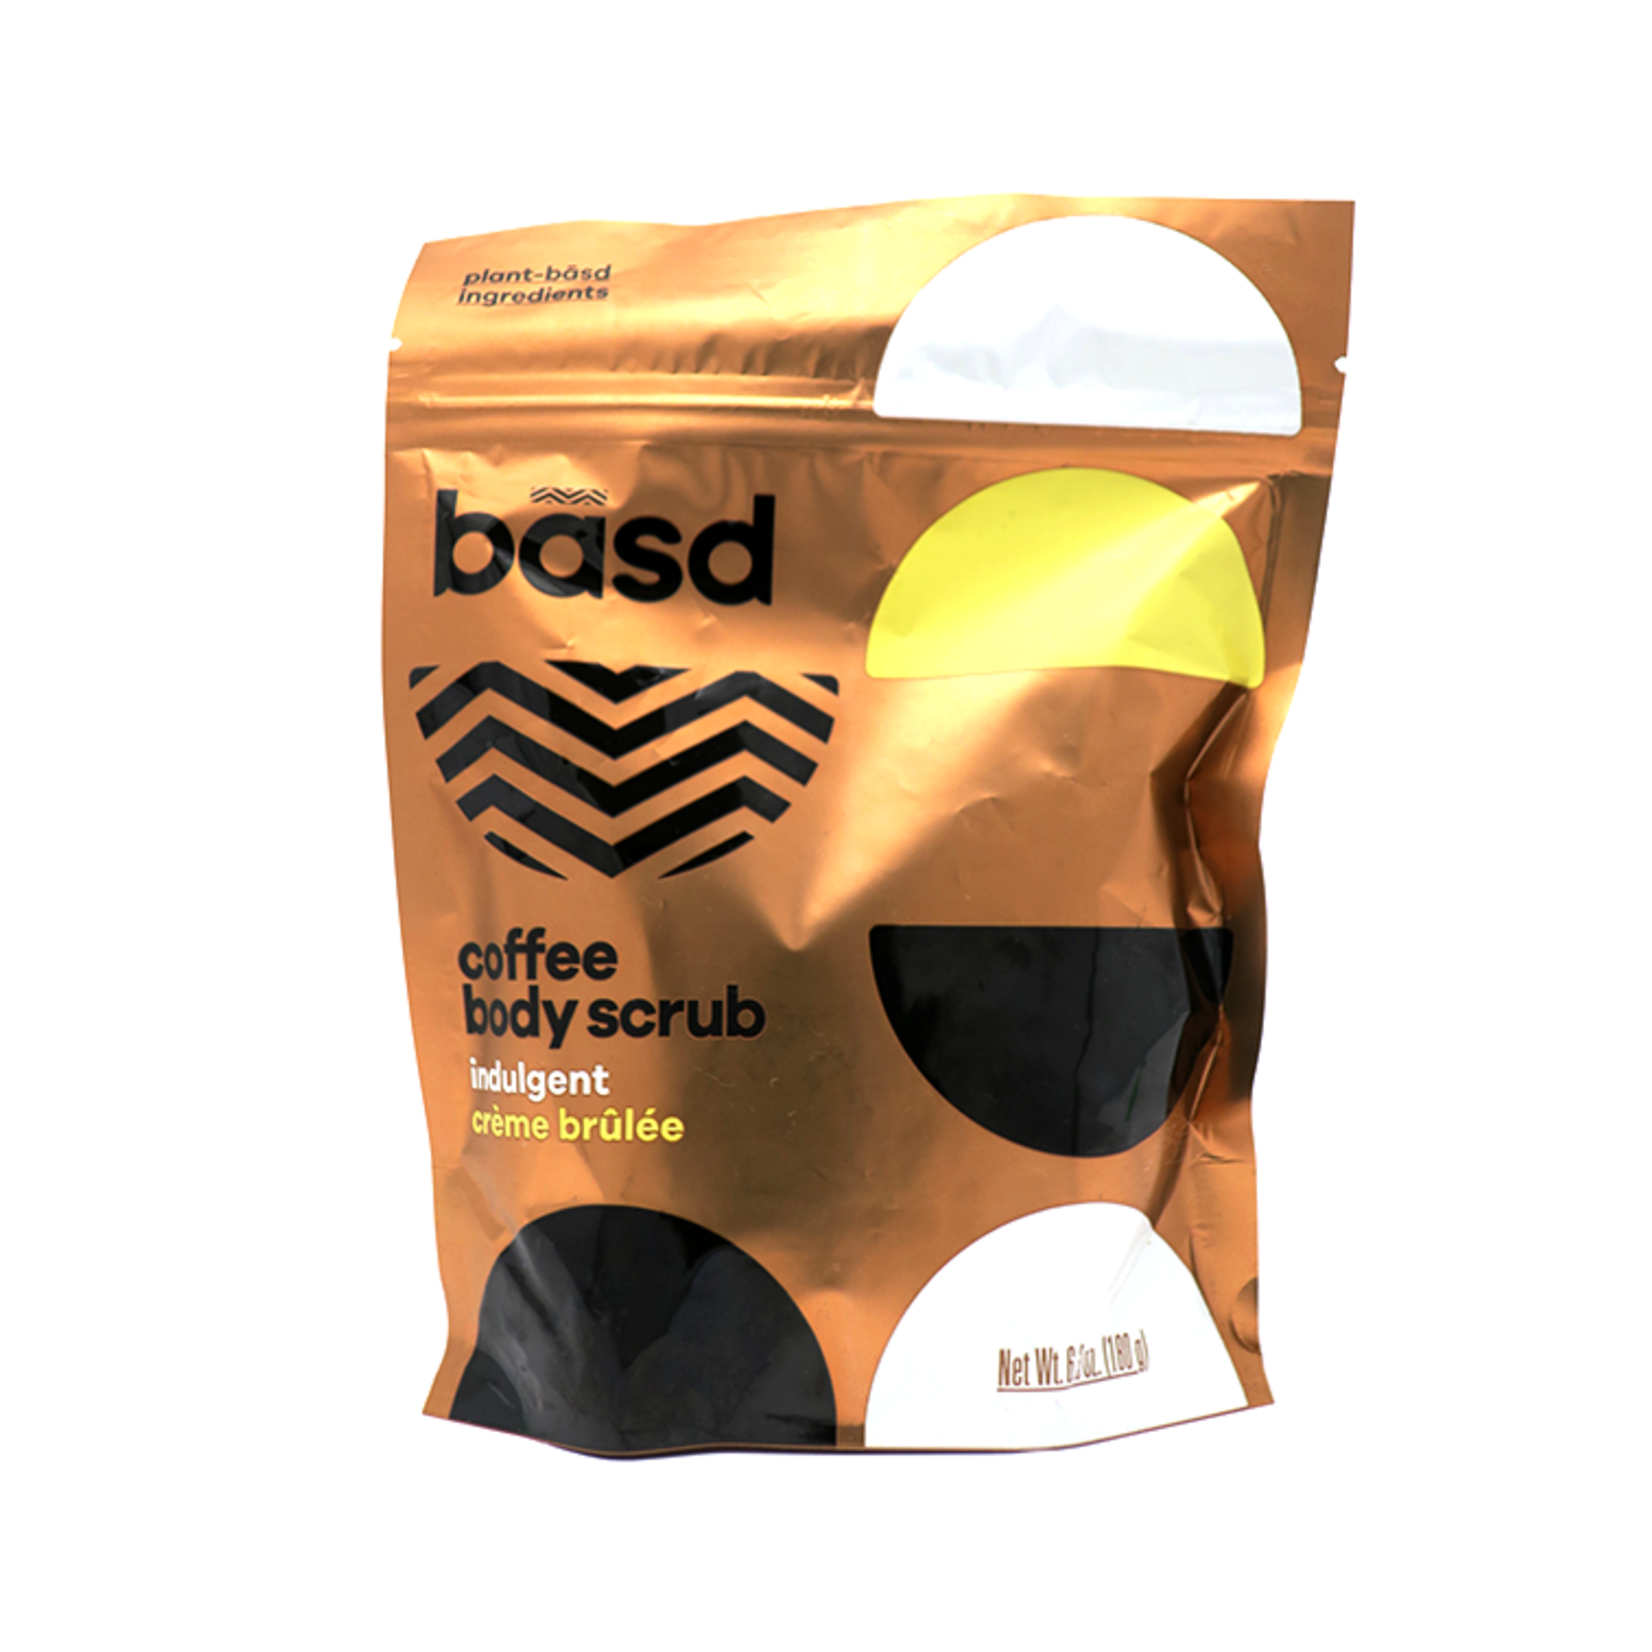 BASD BASD INVIGORATING CREME BRULEE BODY SCRUB